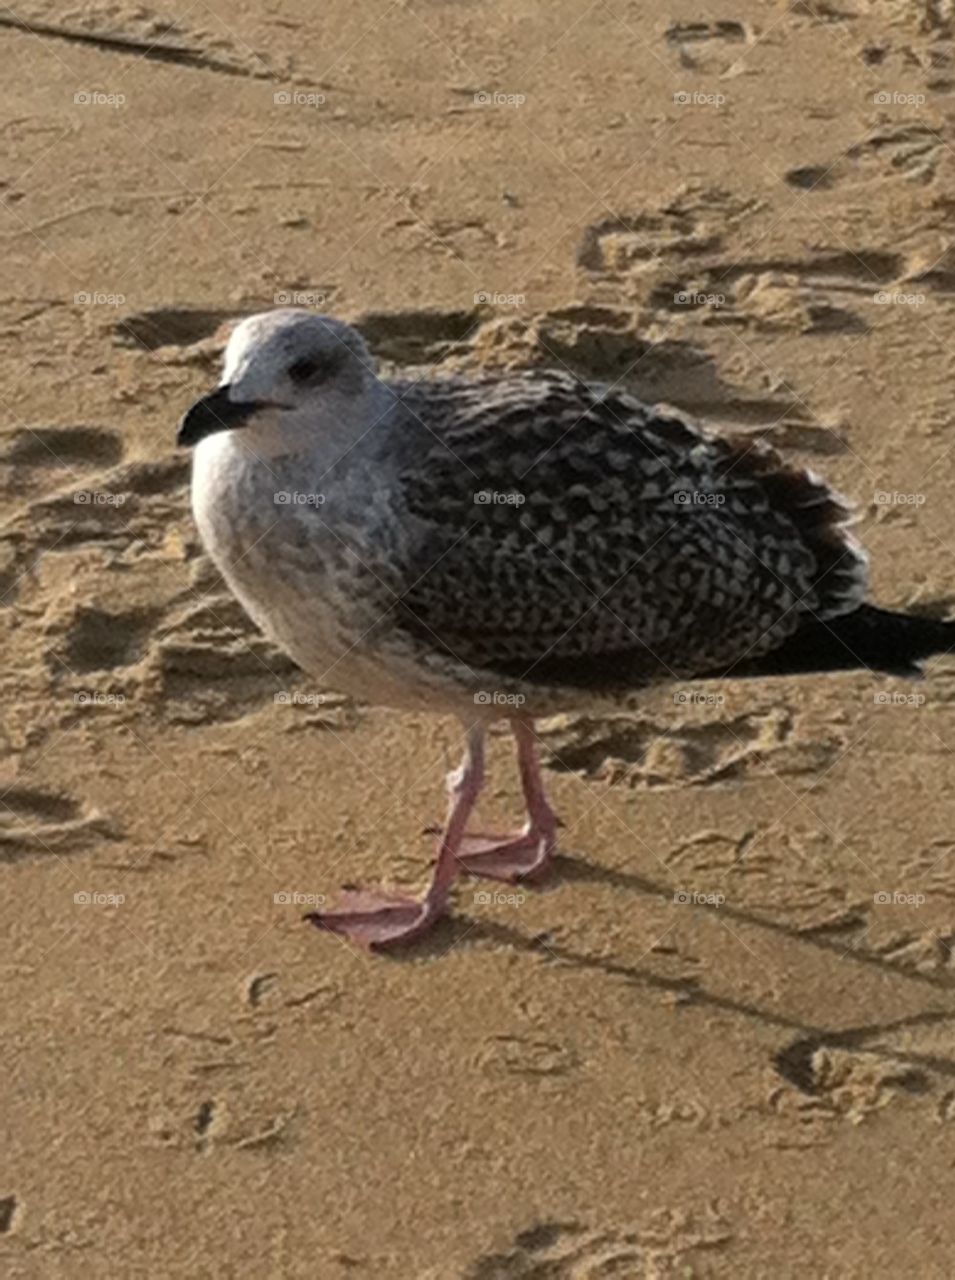 Bird at the beach